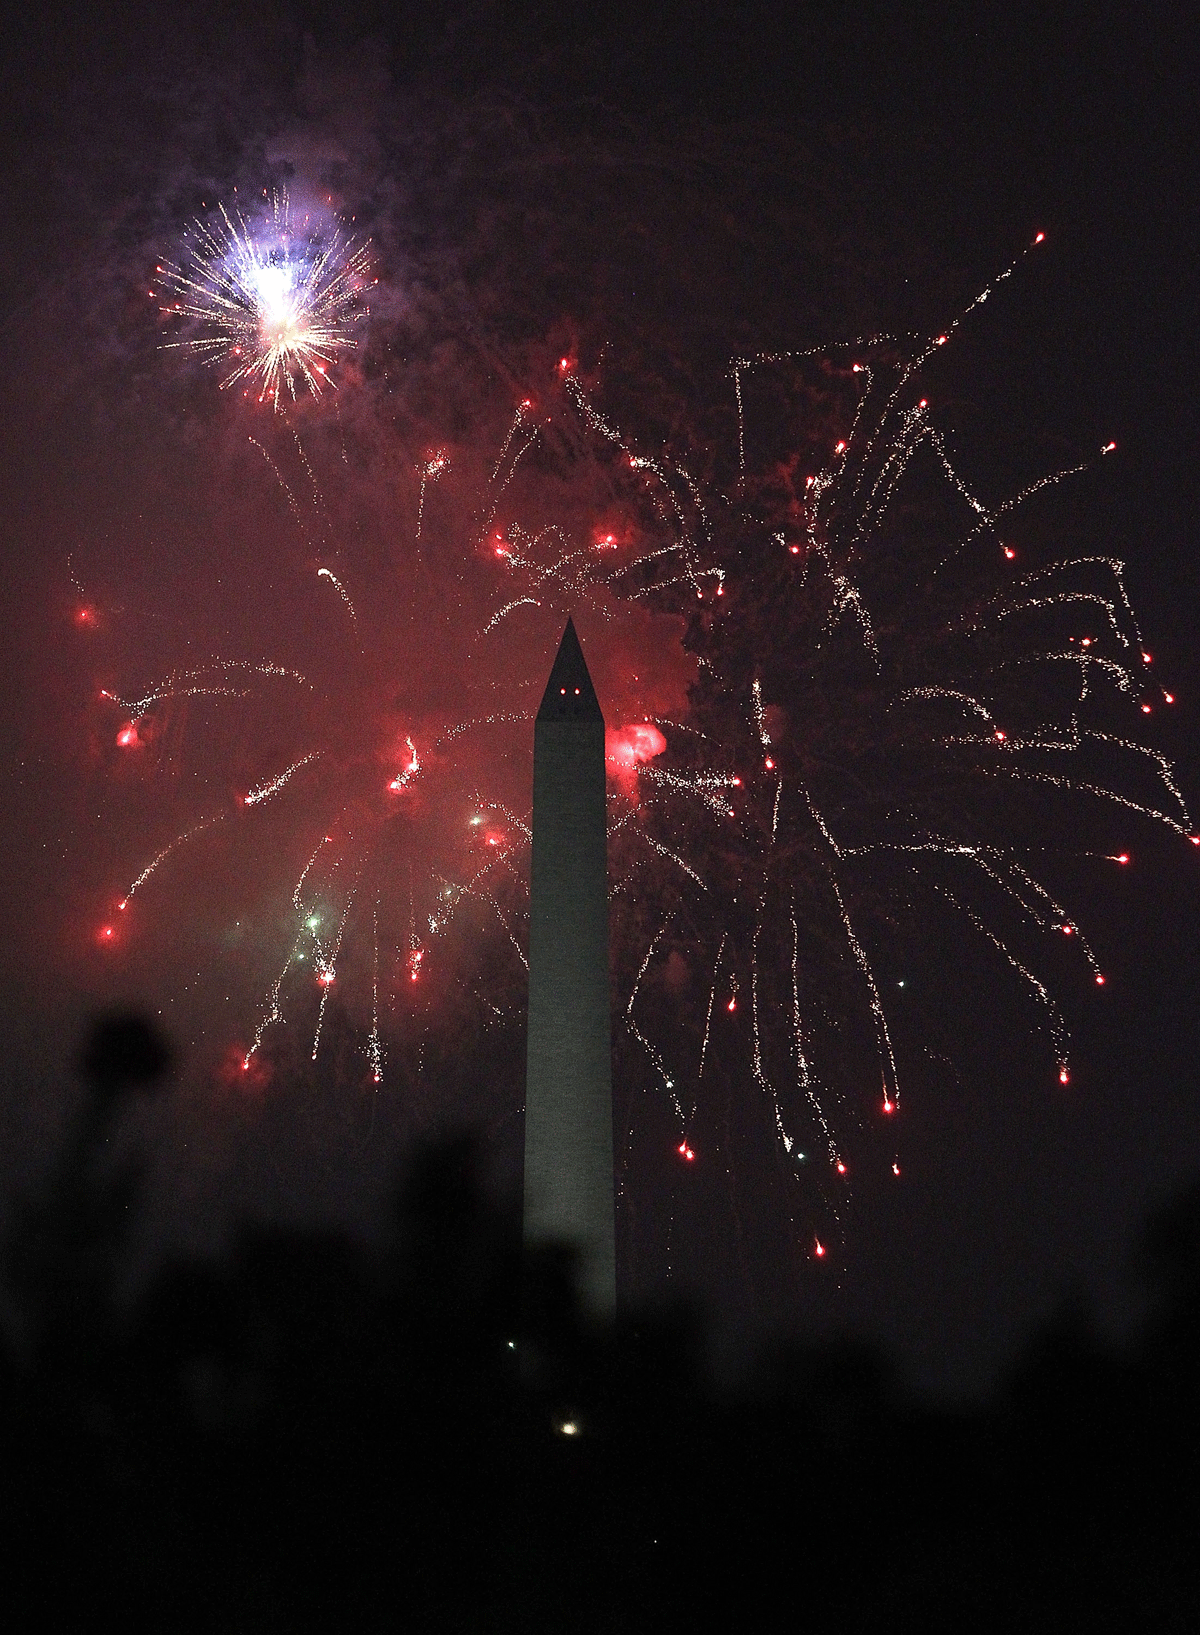 Rain could put a damper on D.C. fireworks show